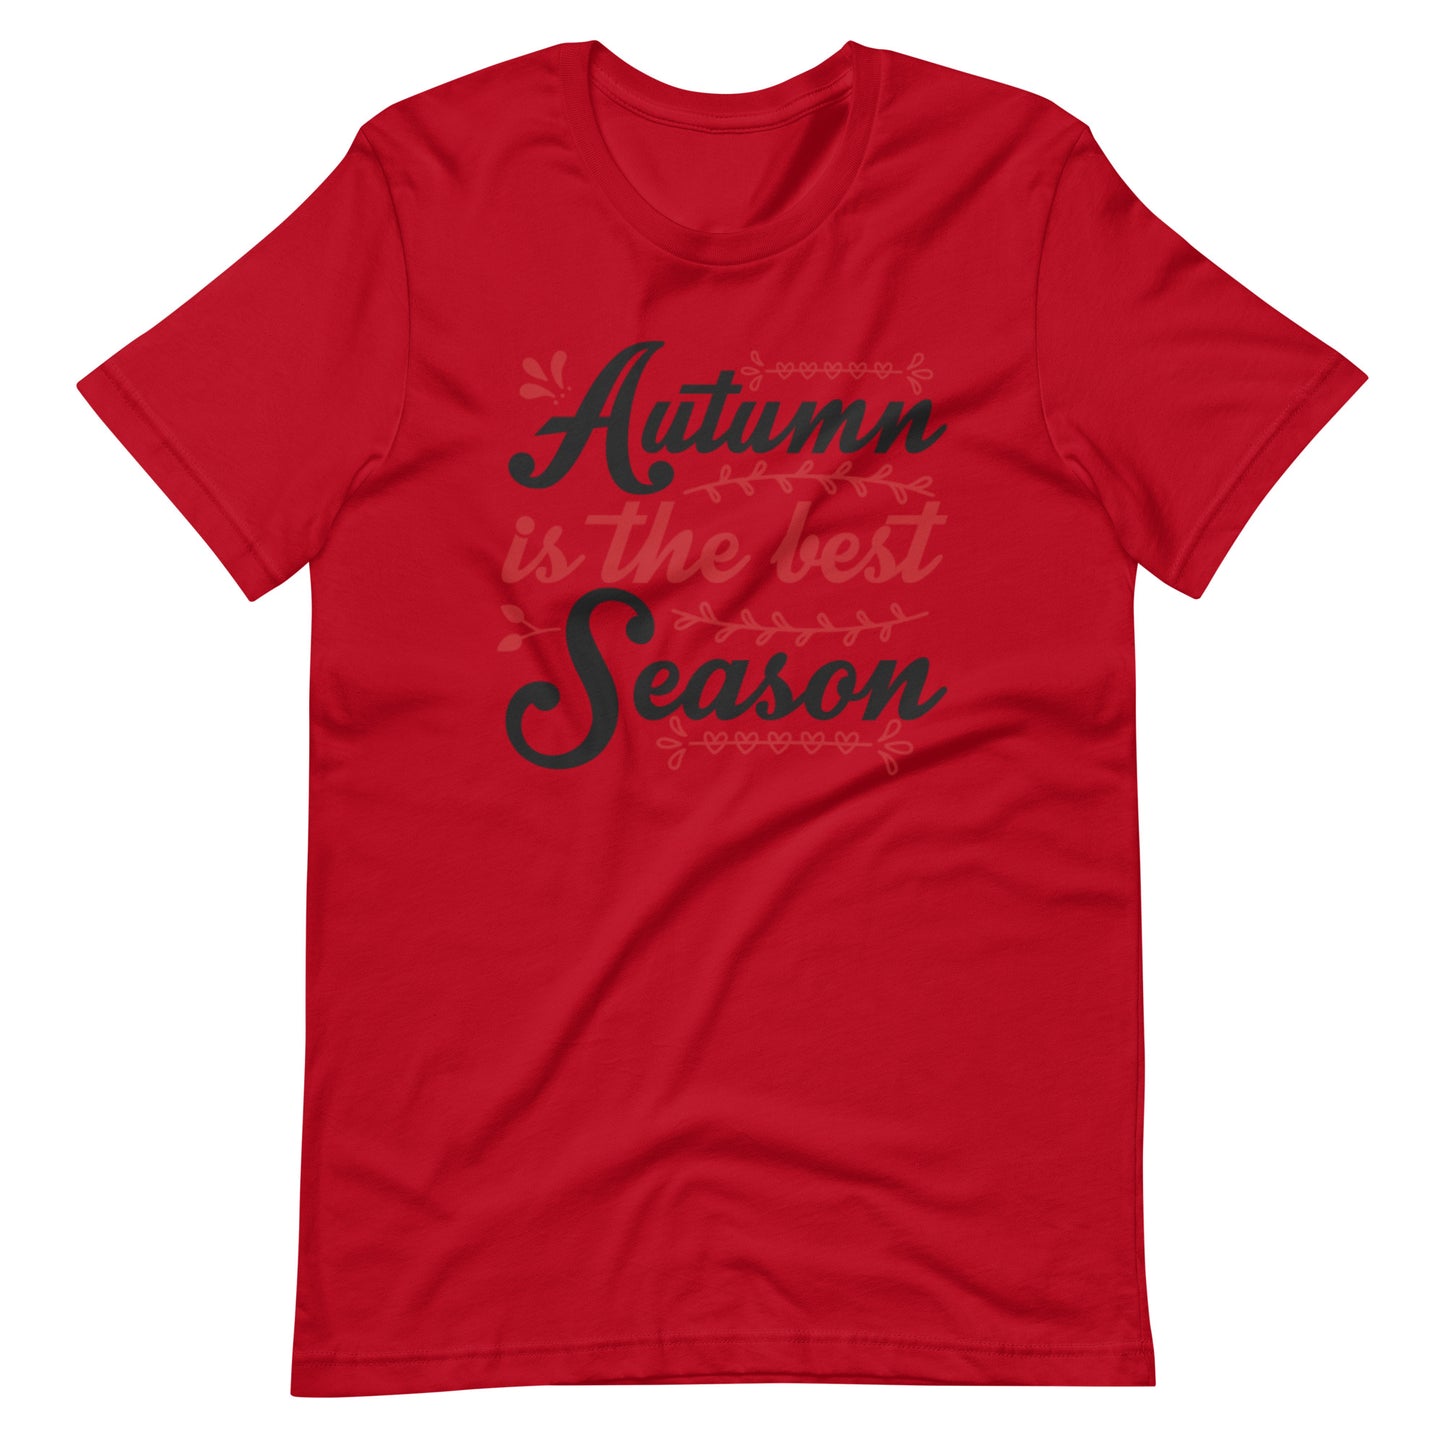 Printagon - Autumn Is The Best Season - Unisex T-shirt - Red / XS